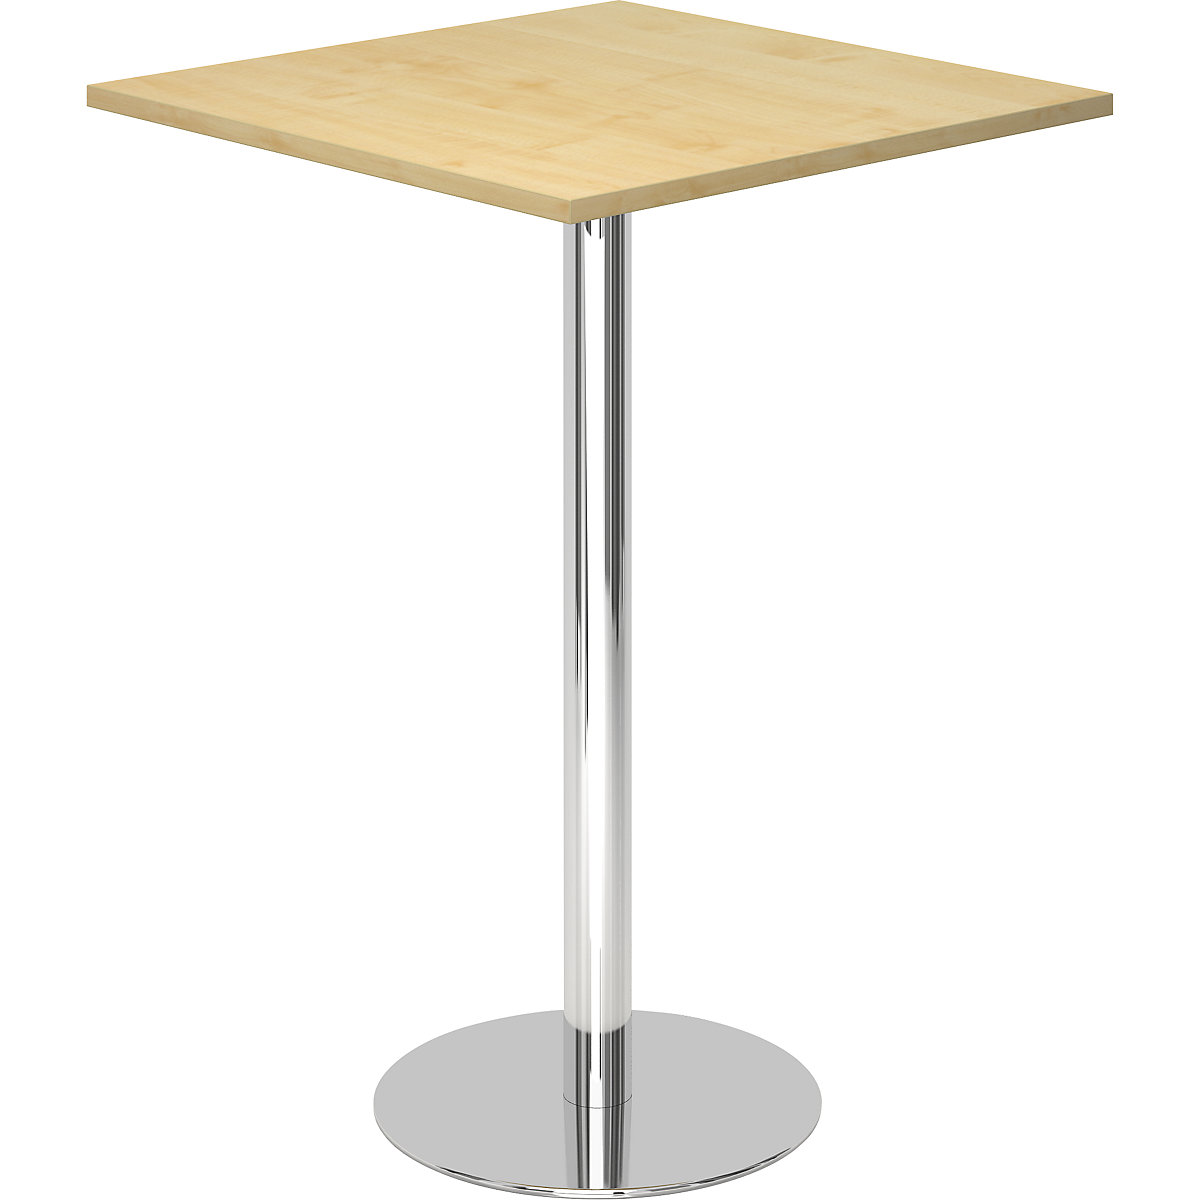 Visoki stol, DxŠ 800 x 800 mm, visina 1116 mm, kromirano postolje, ploča u imitaciji javora-5